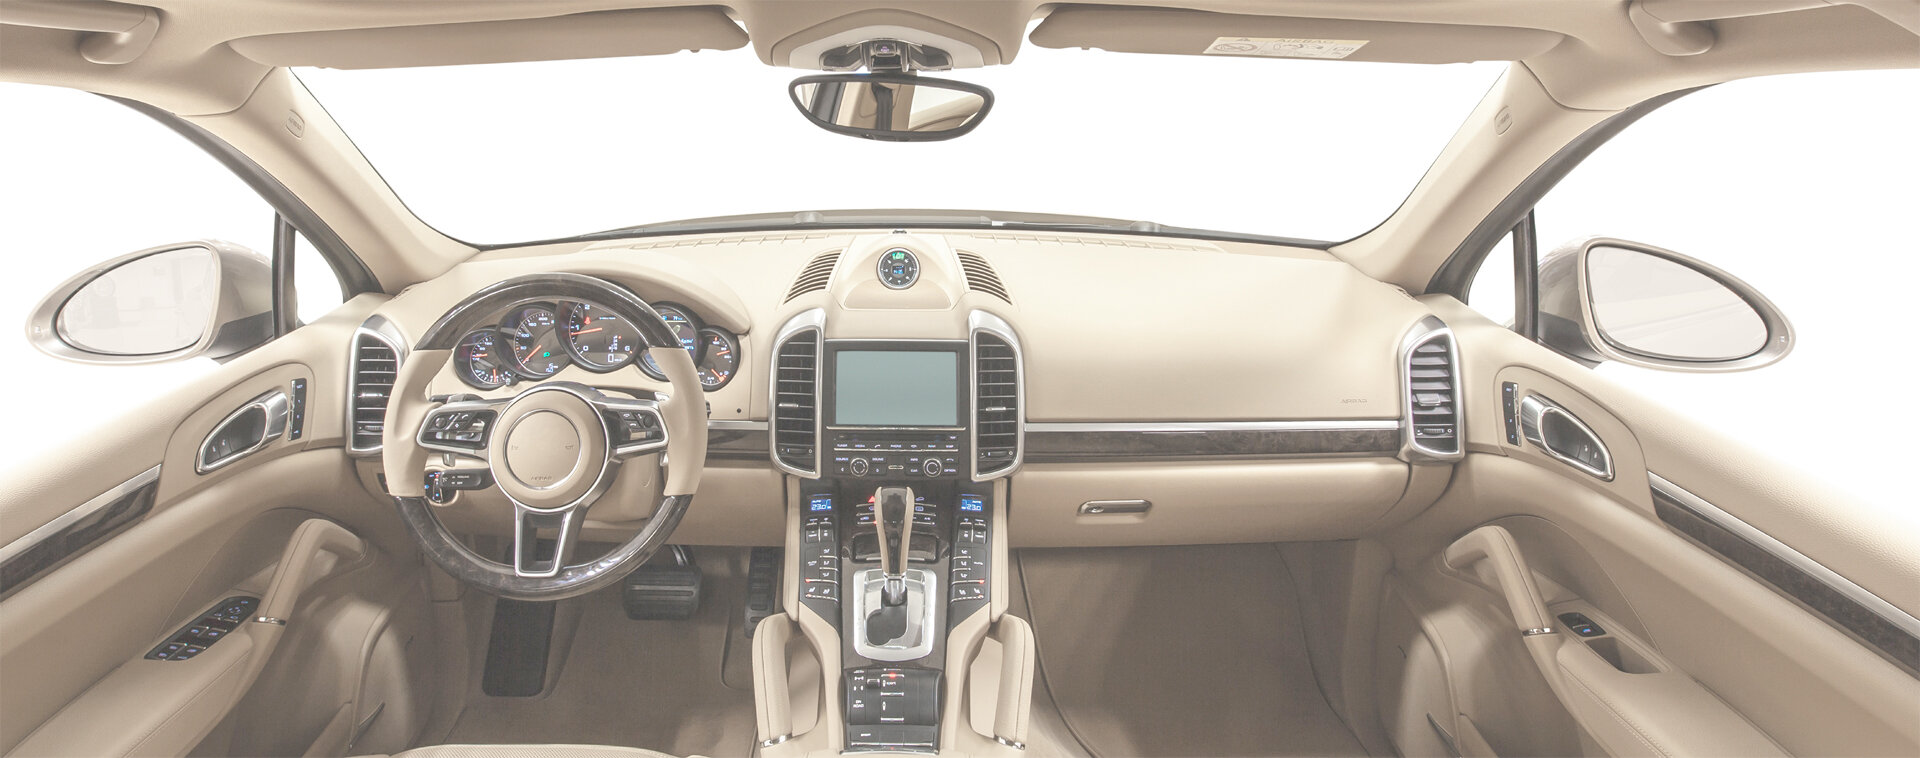 Automotive  - Interior view of a car